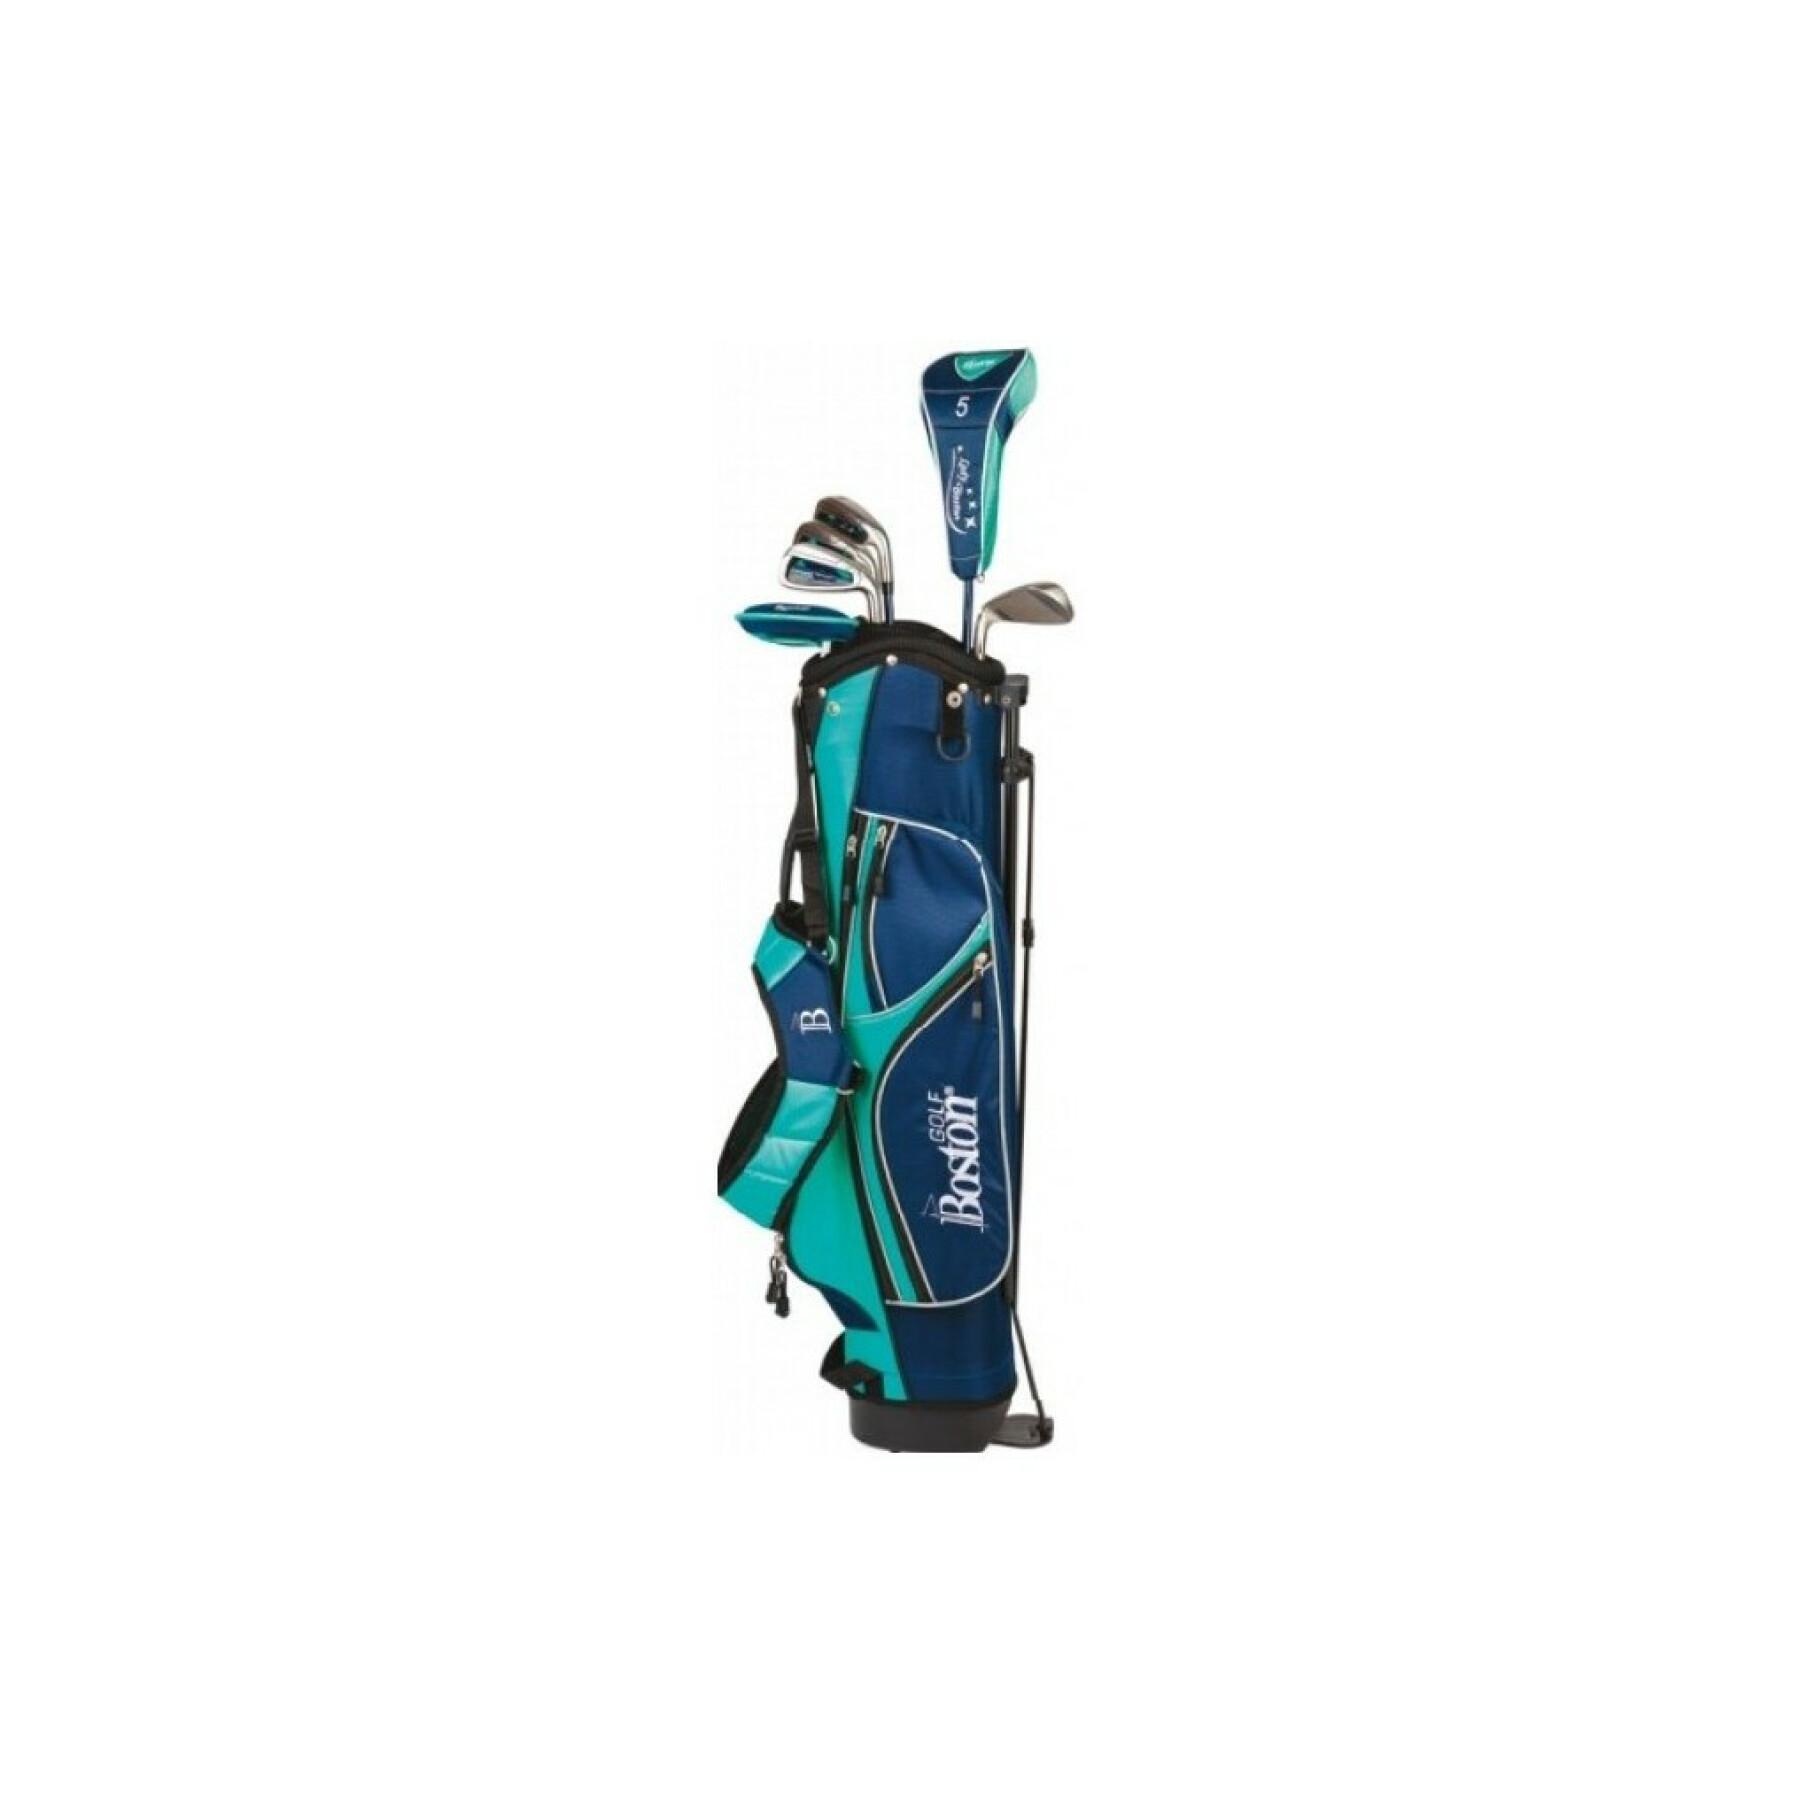 Kit (tas + 6 clubs) linkshandige vrouw Boston Golf kimba 6" 1/2 série